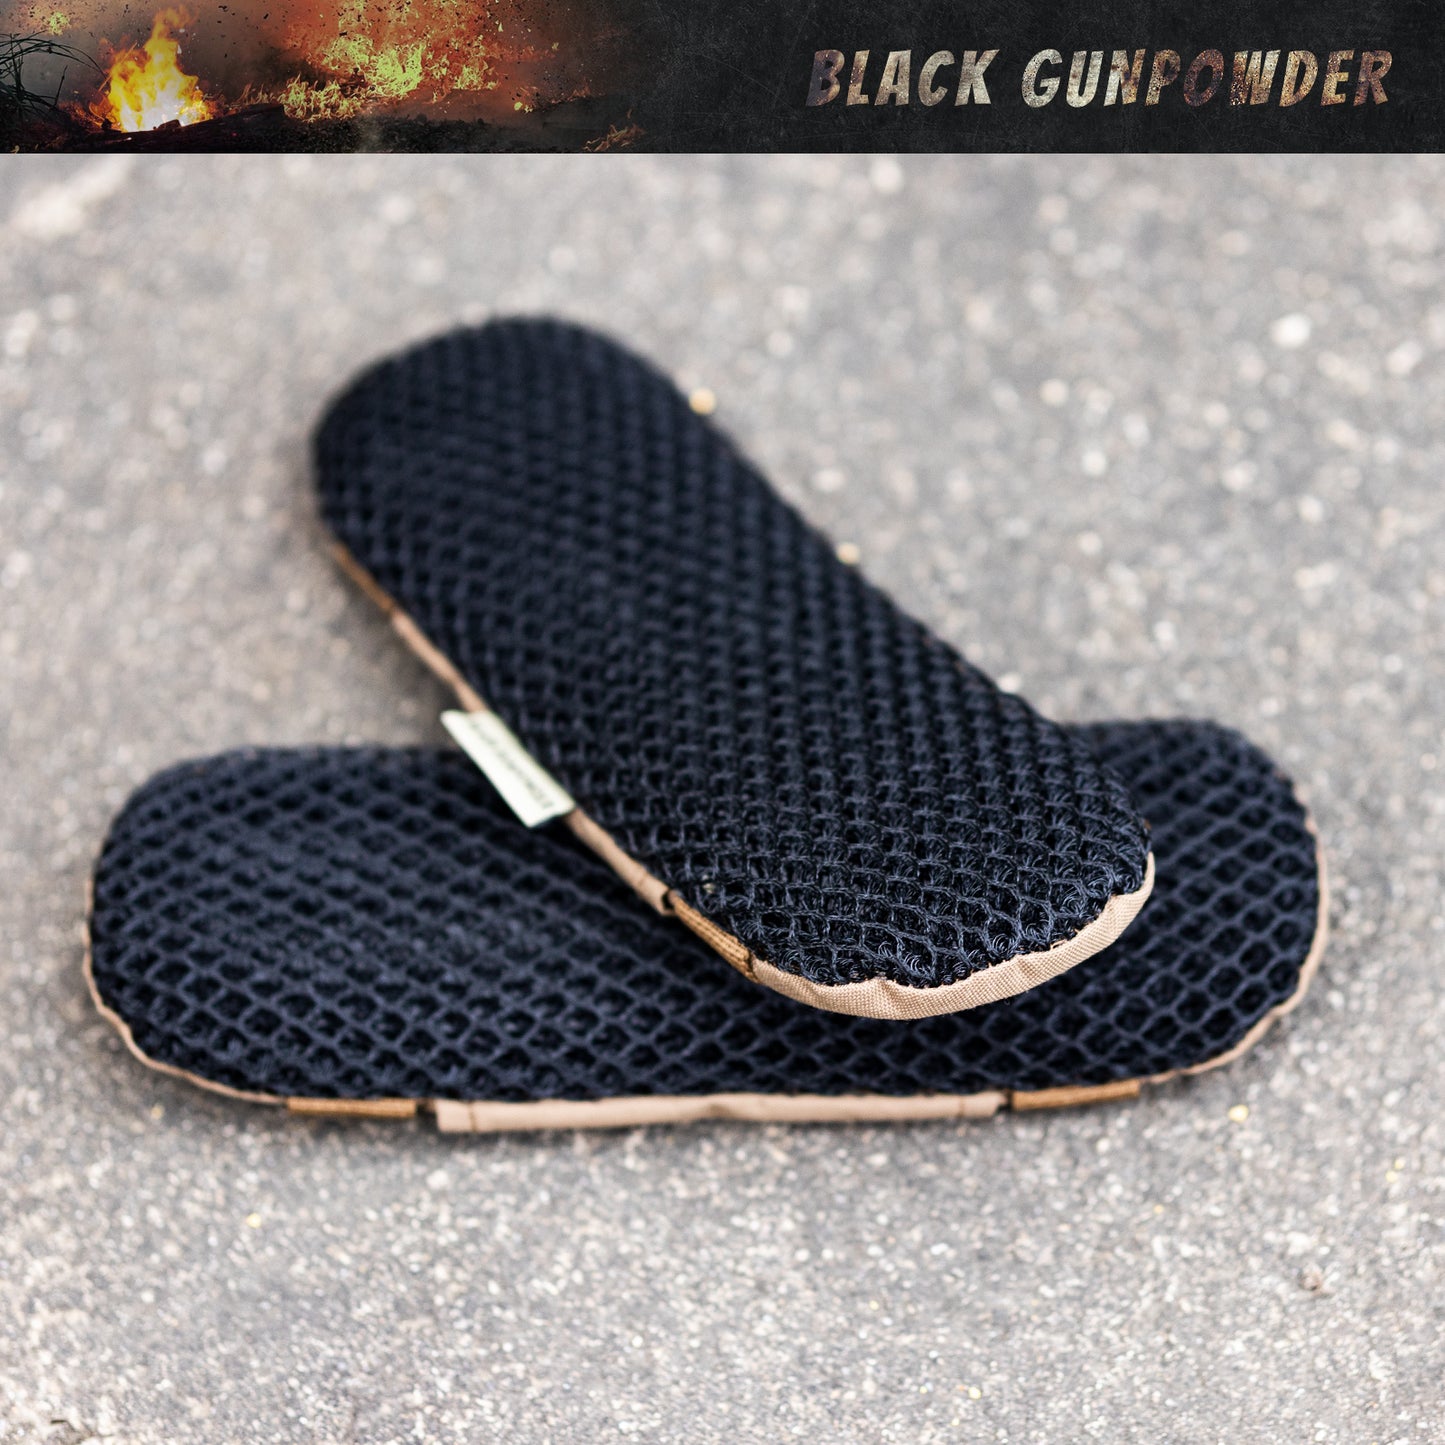 Black Gunpowder Tactical Shoulder Pads 3D Breathable Honeycomb Cooling Pads 1 Pair